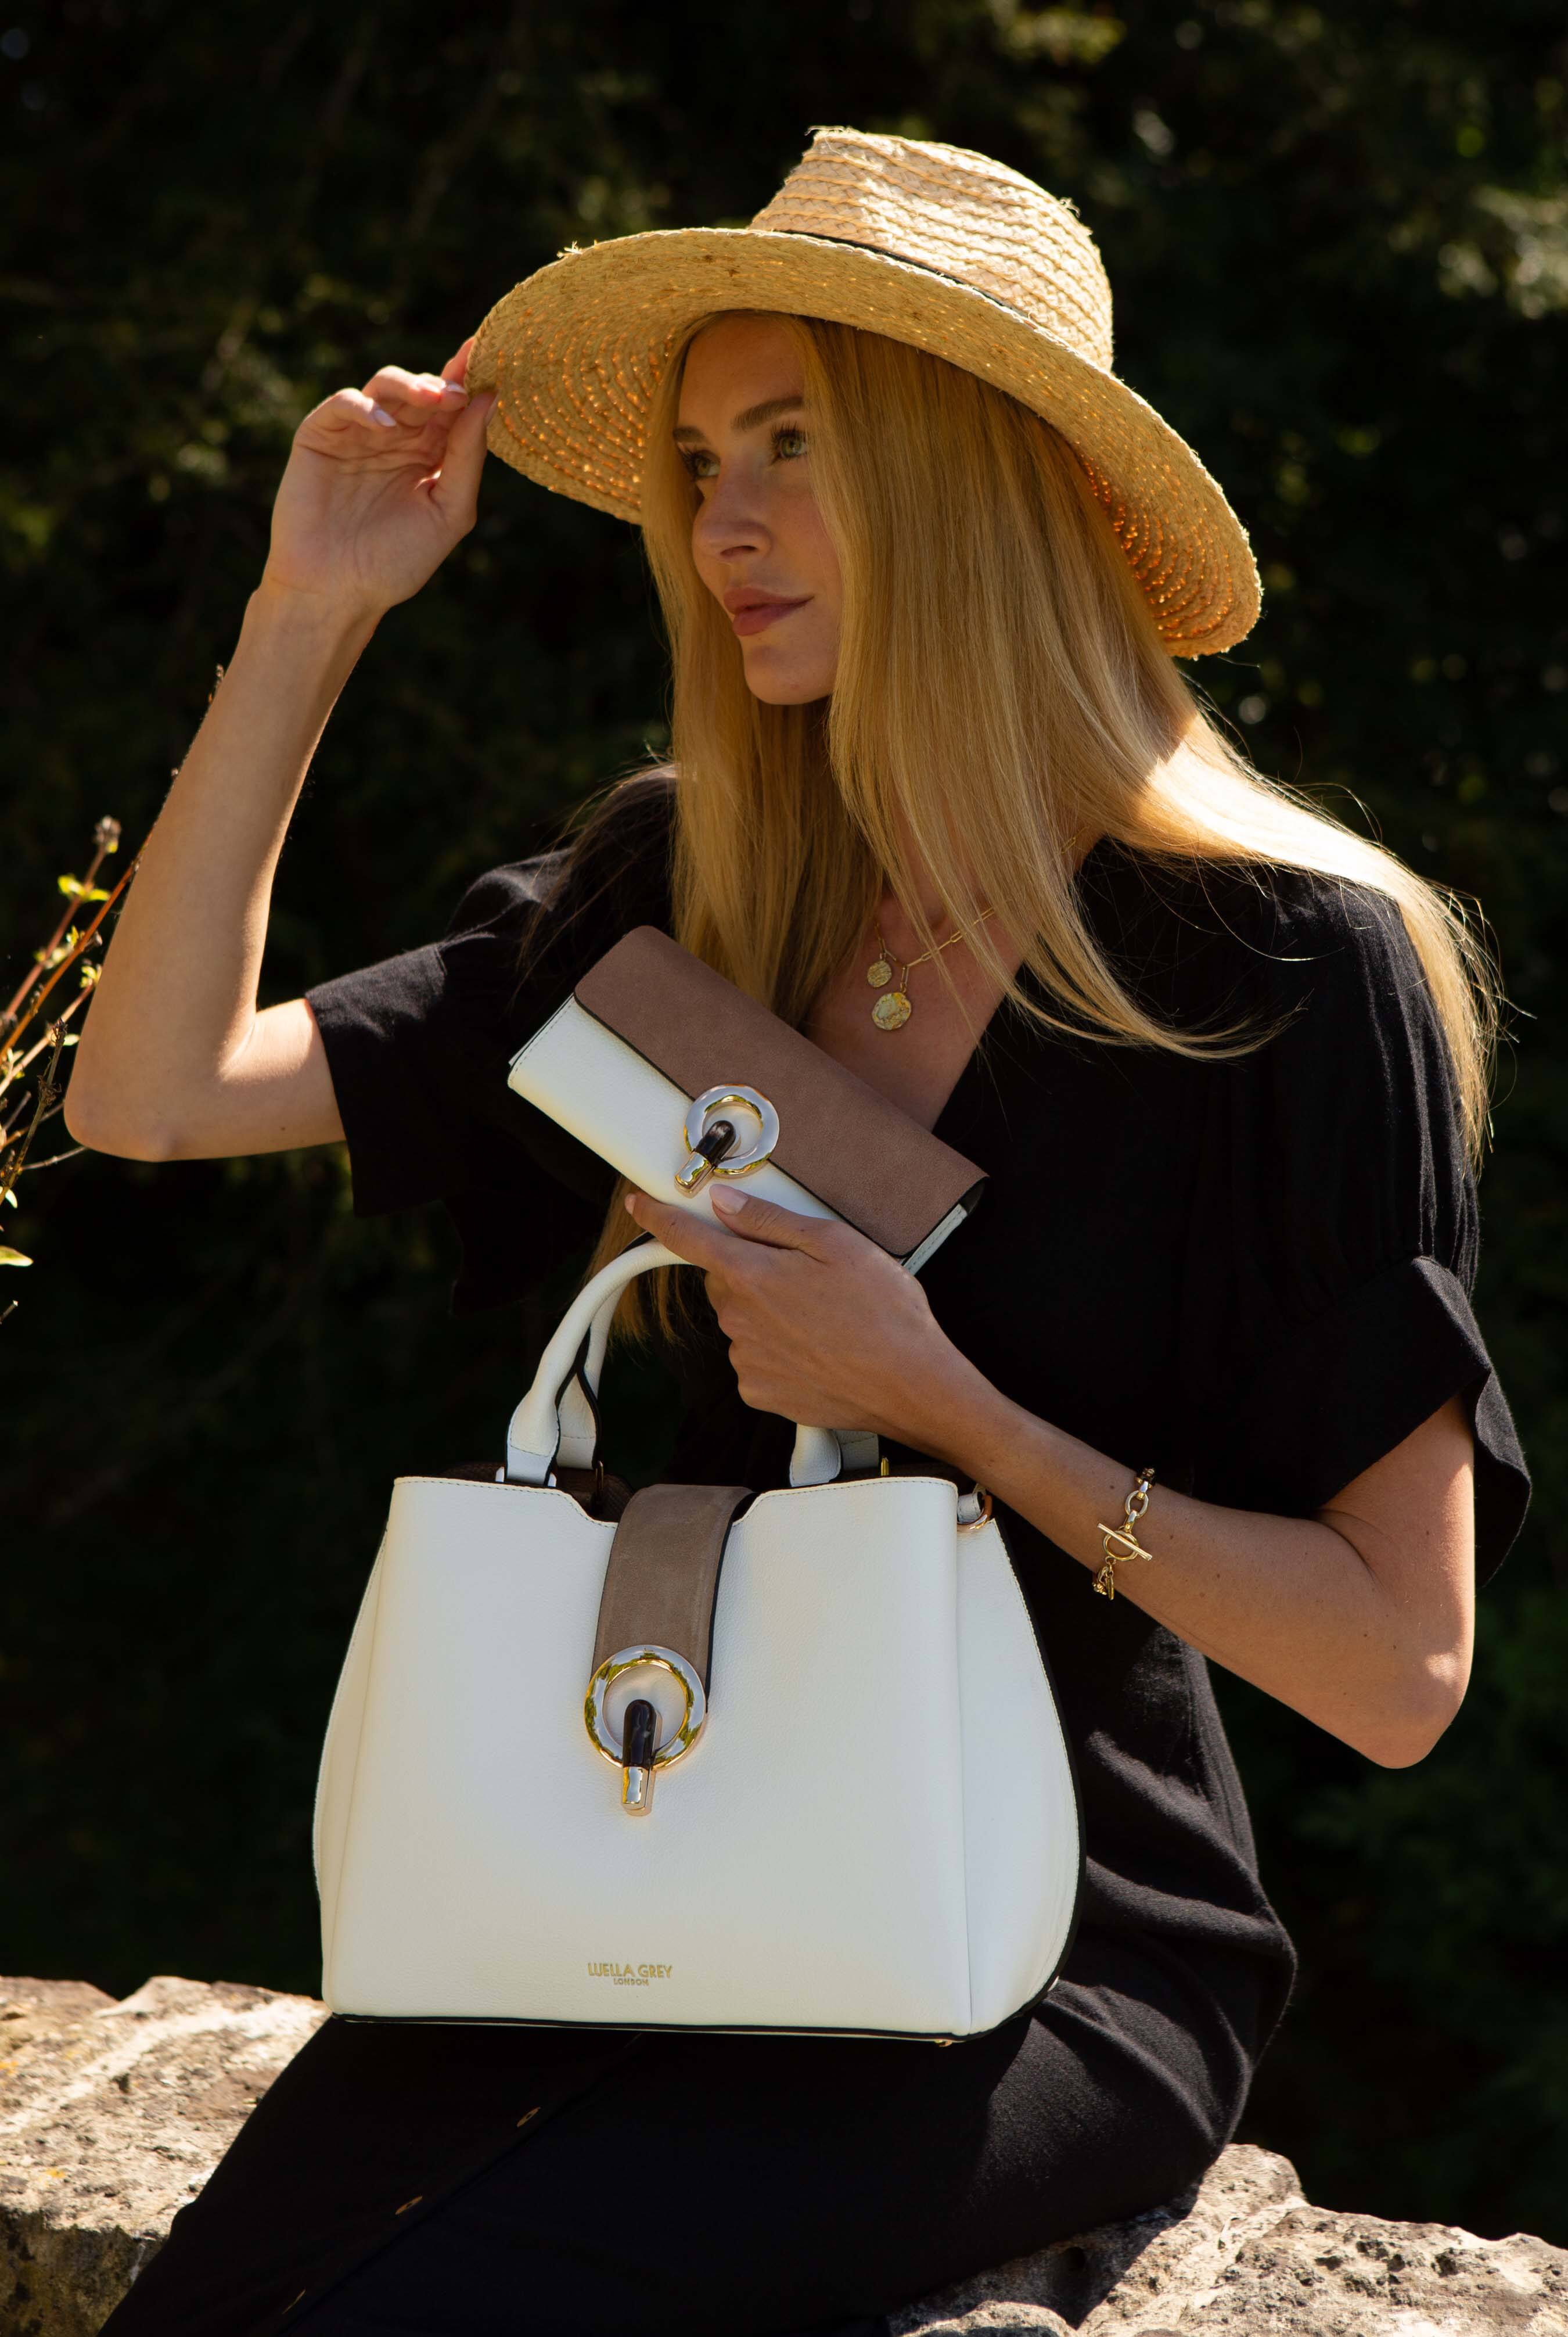 luella grey orlanda white handbag model 1 copy